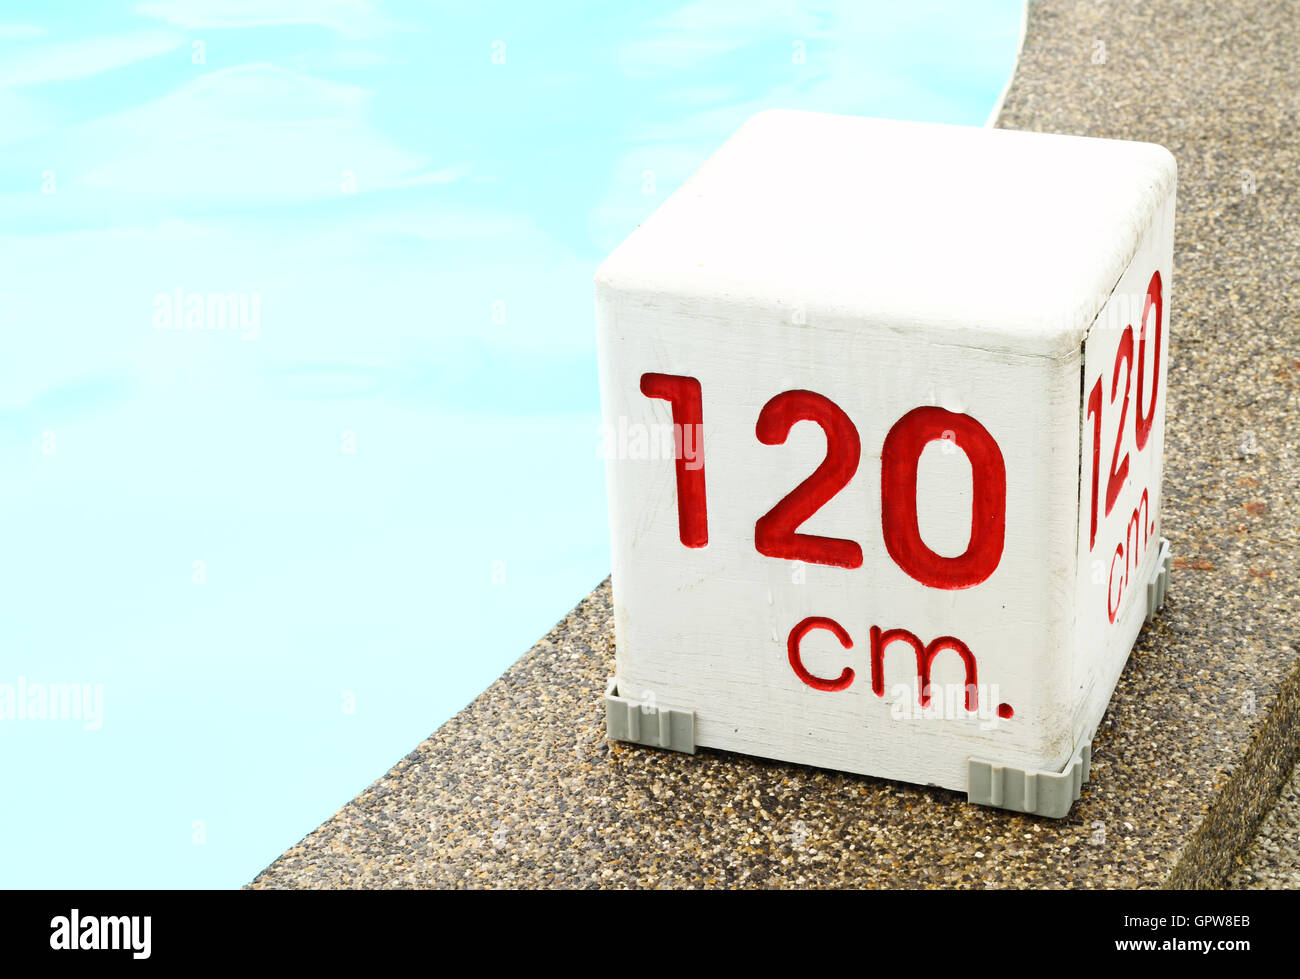 120 cm. water depth sign Stock Photo